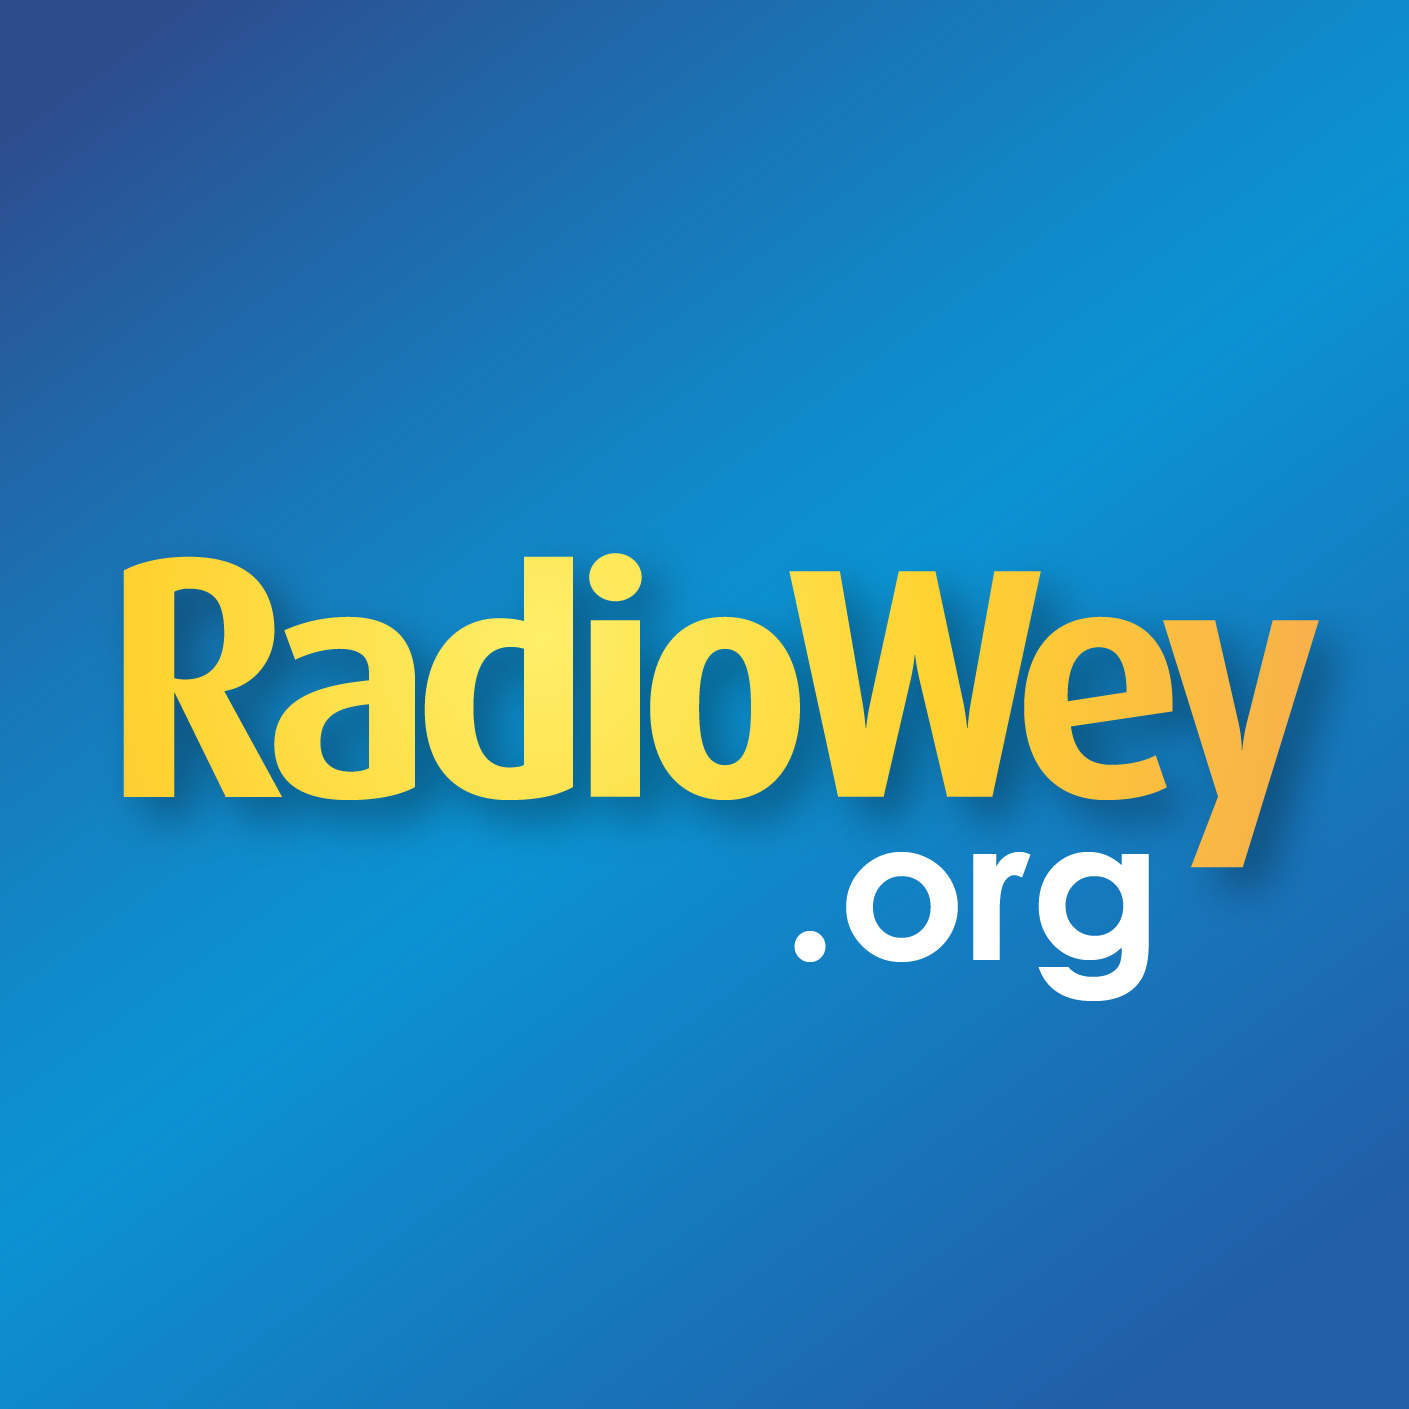 (c) Radiowey.org